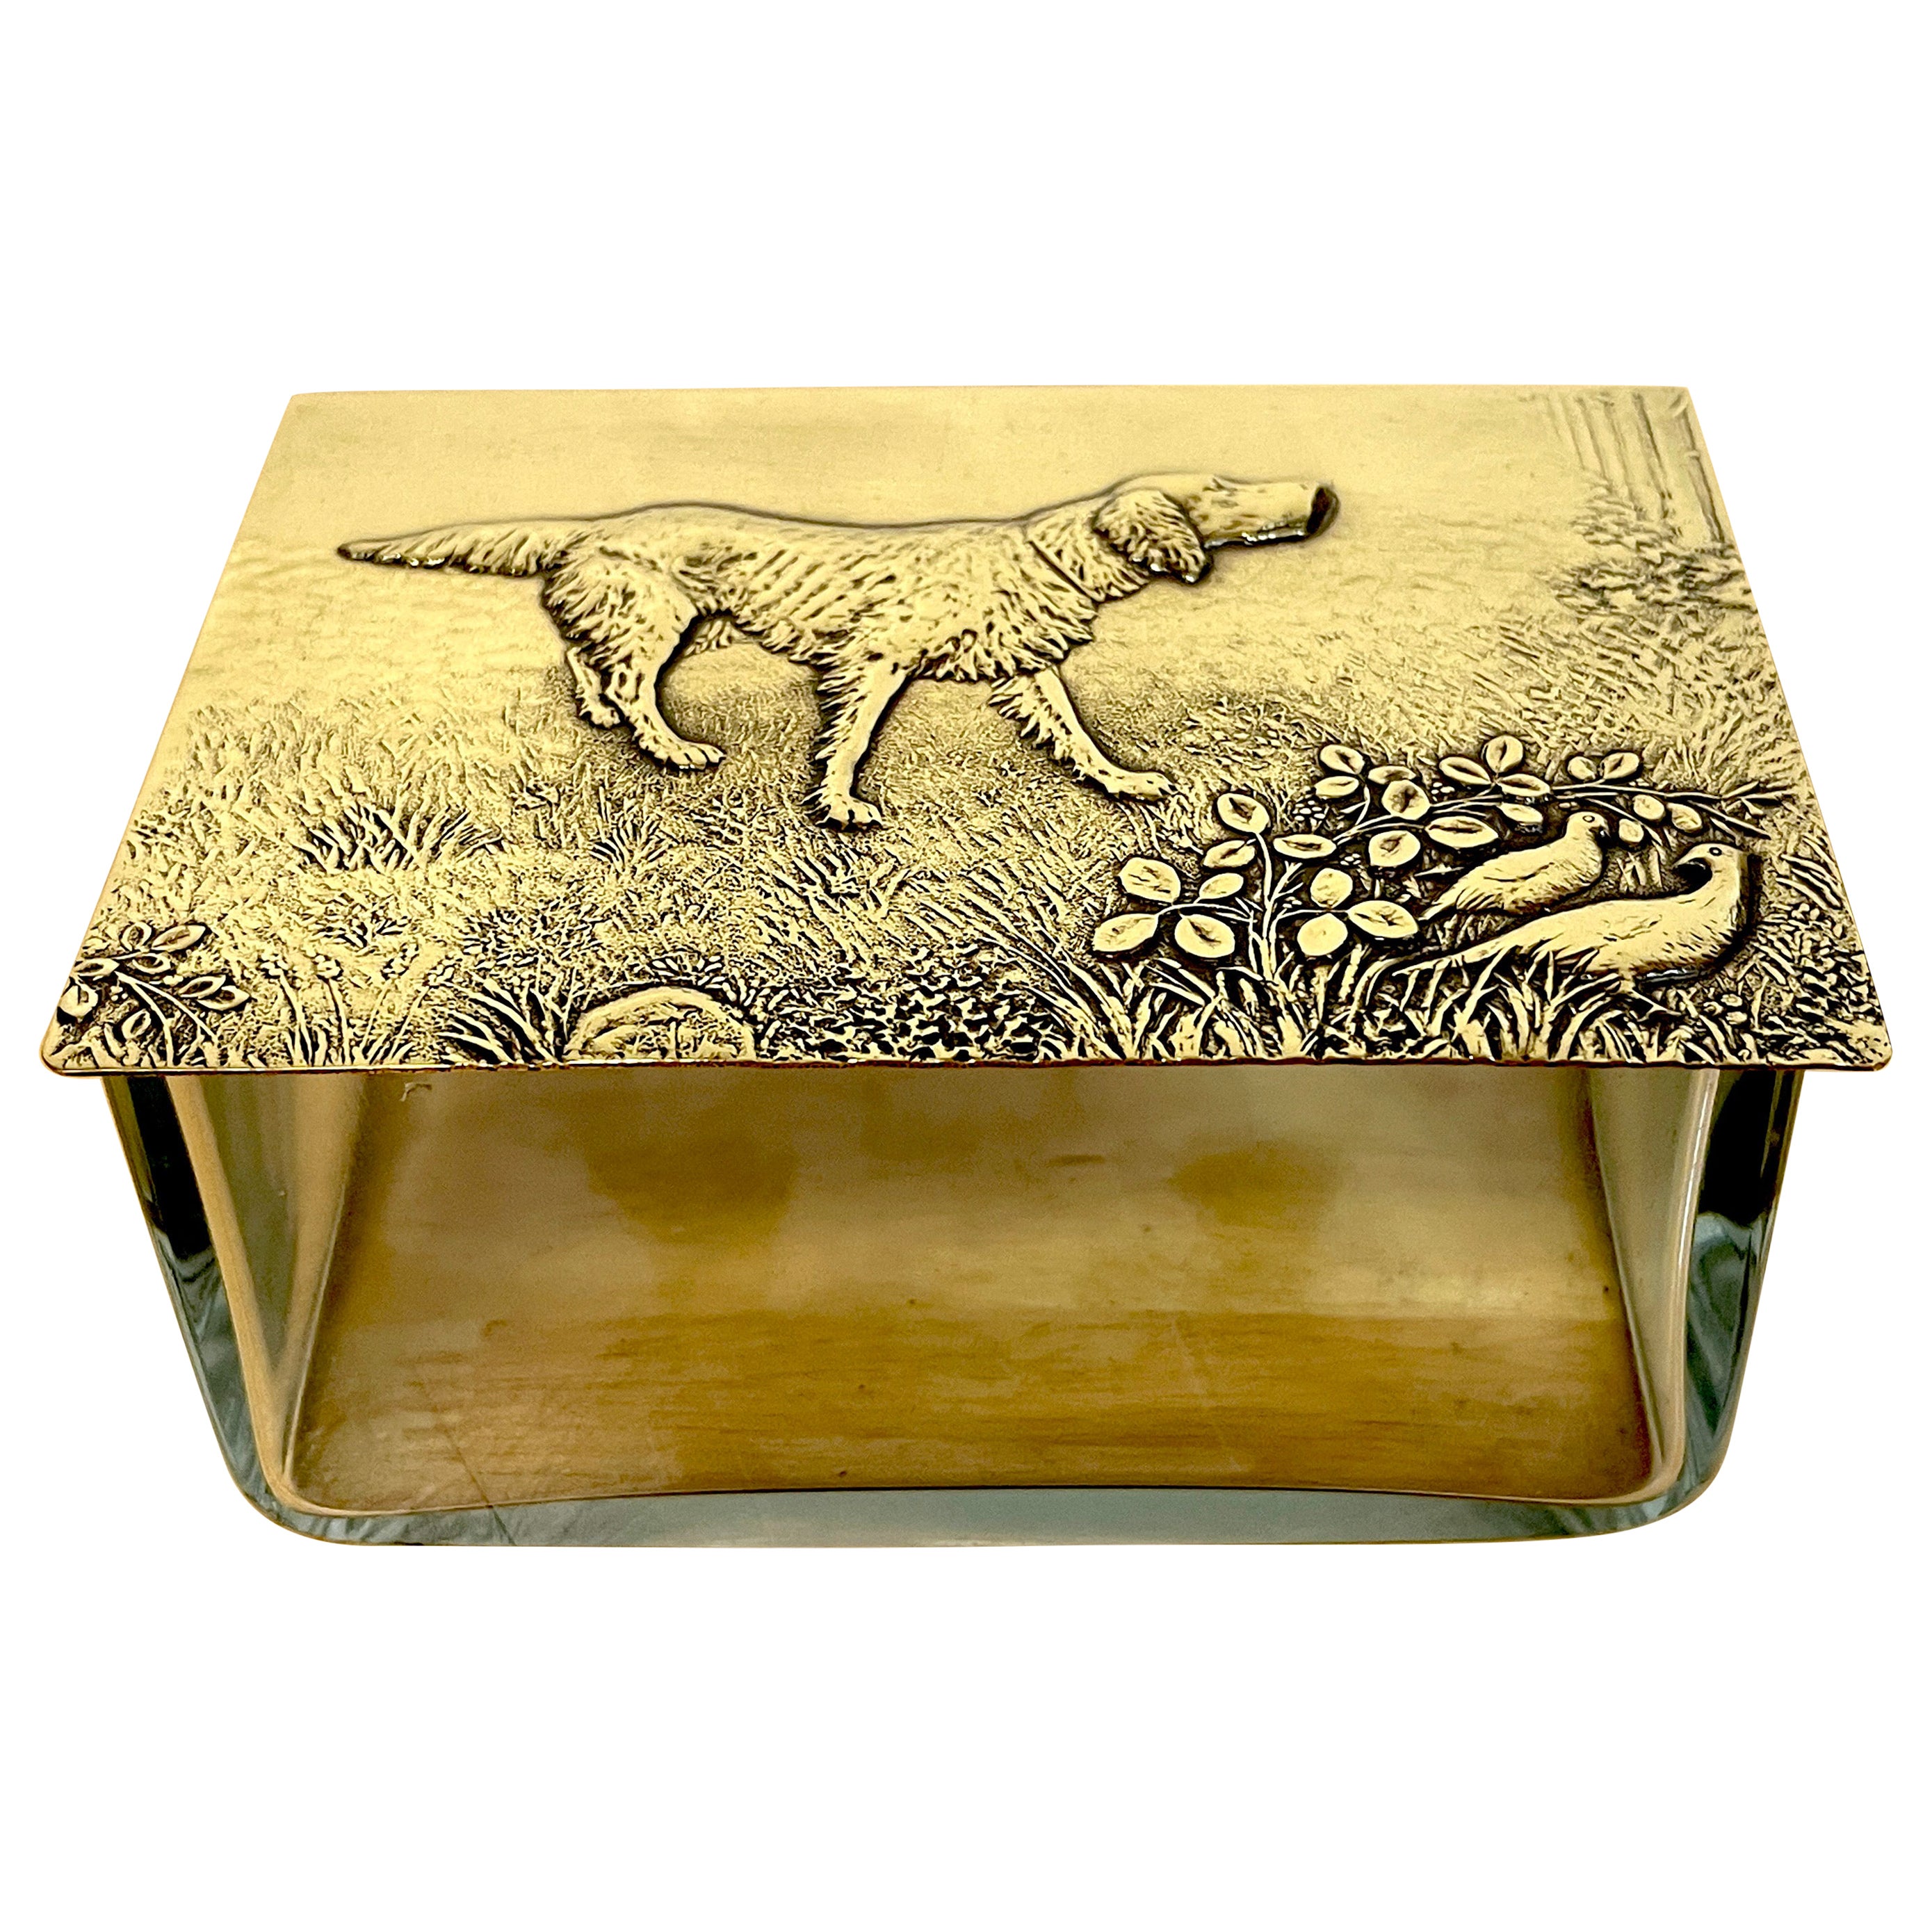 WMF Brass & Crystal Hunting Dog Motif Table Box